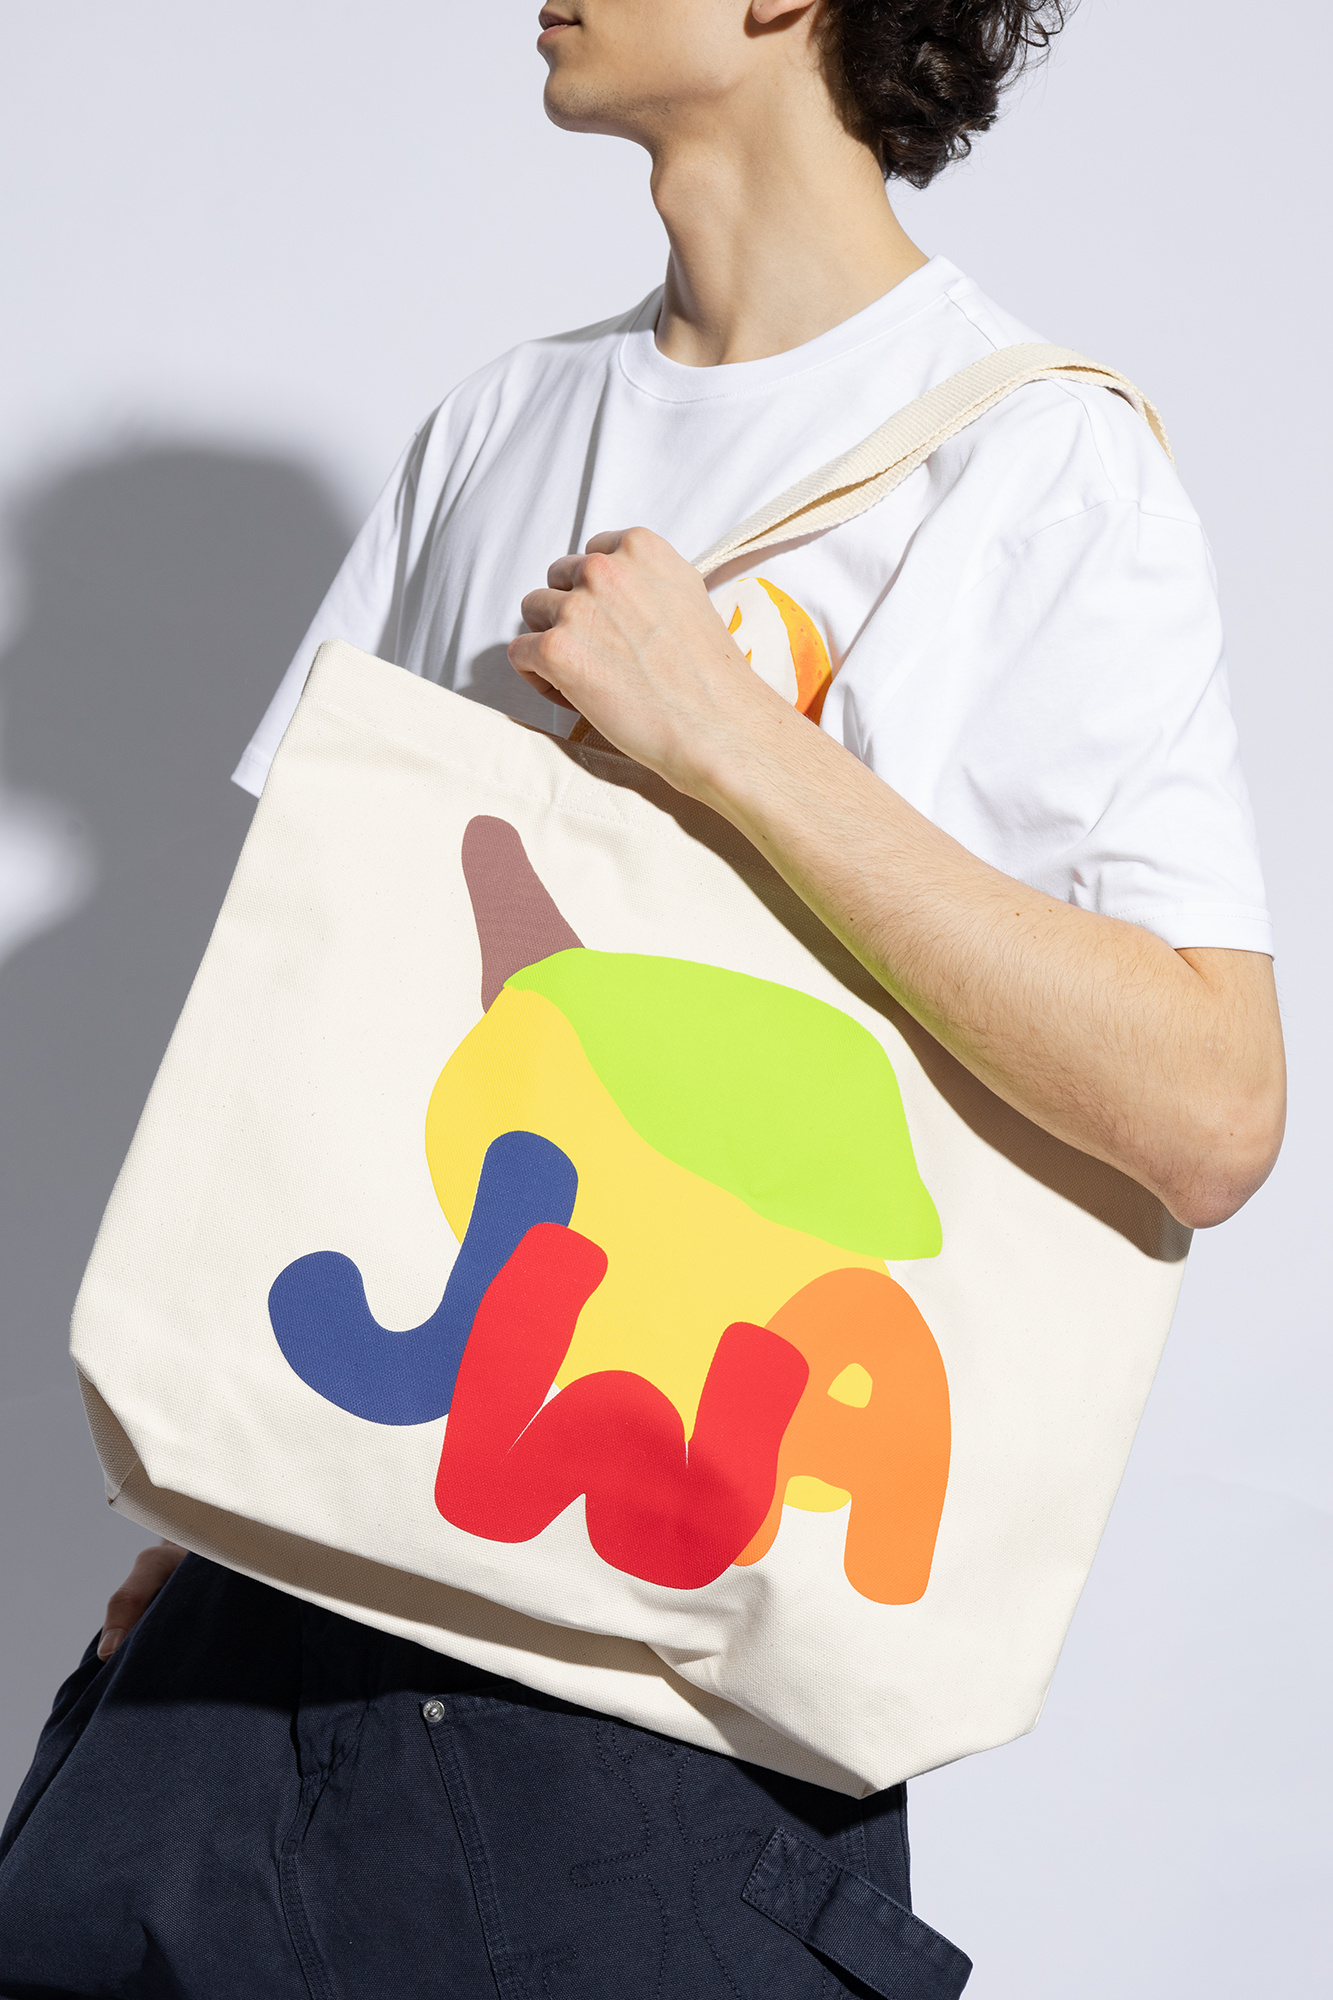 JW Anderson Shopper bag motif with logo